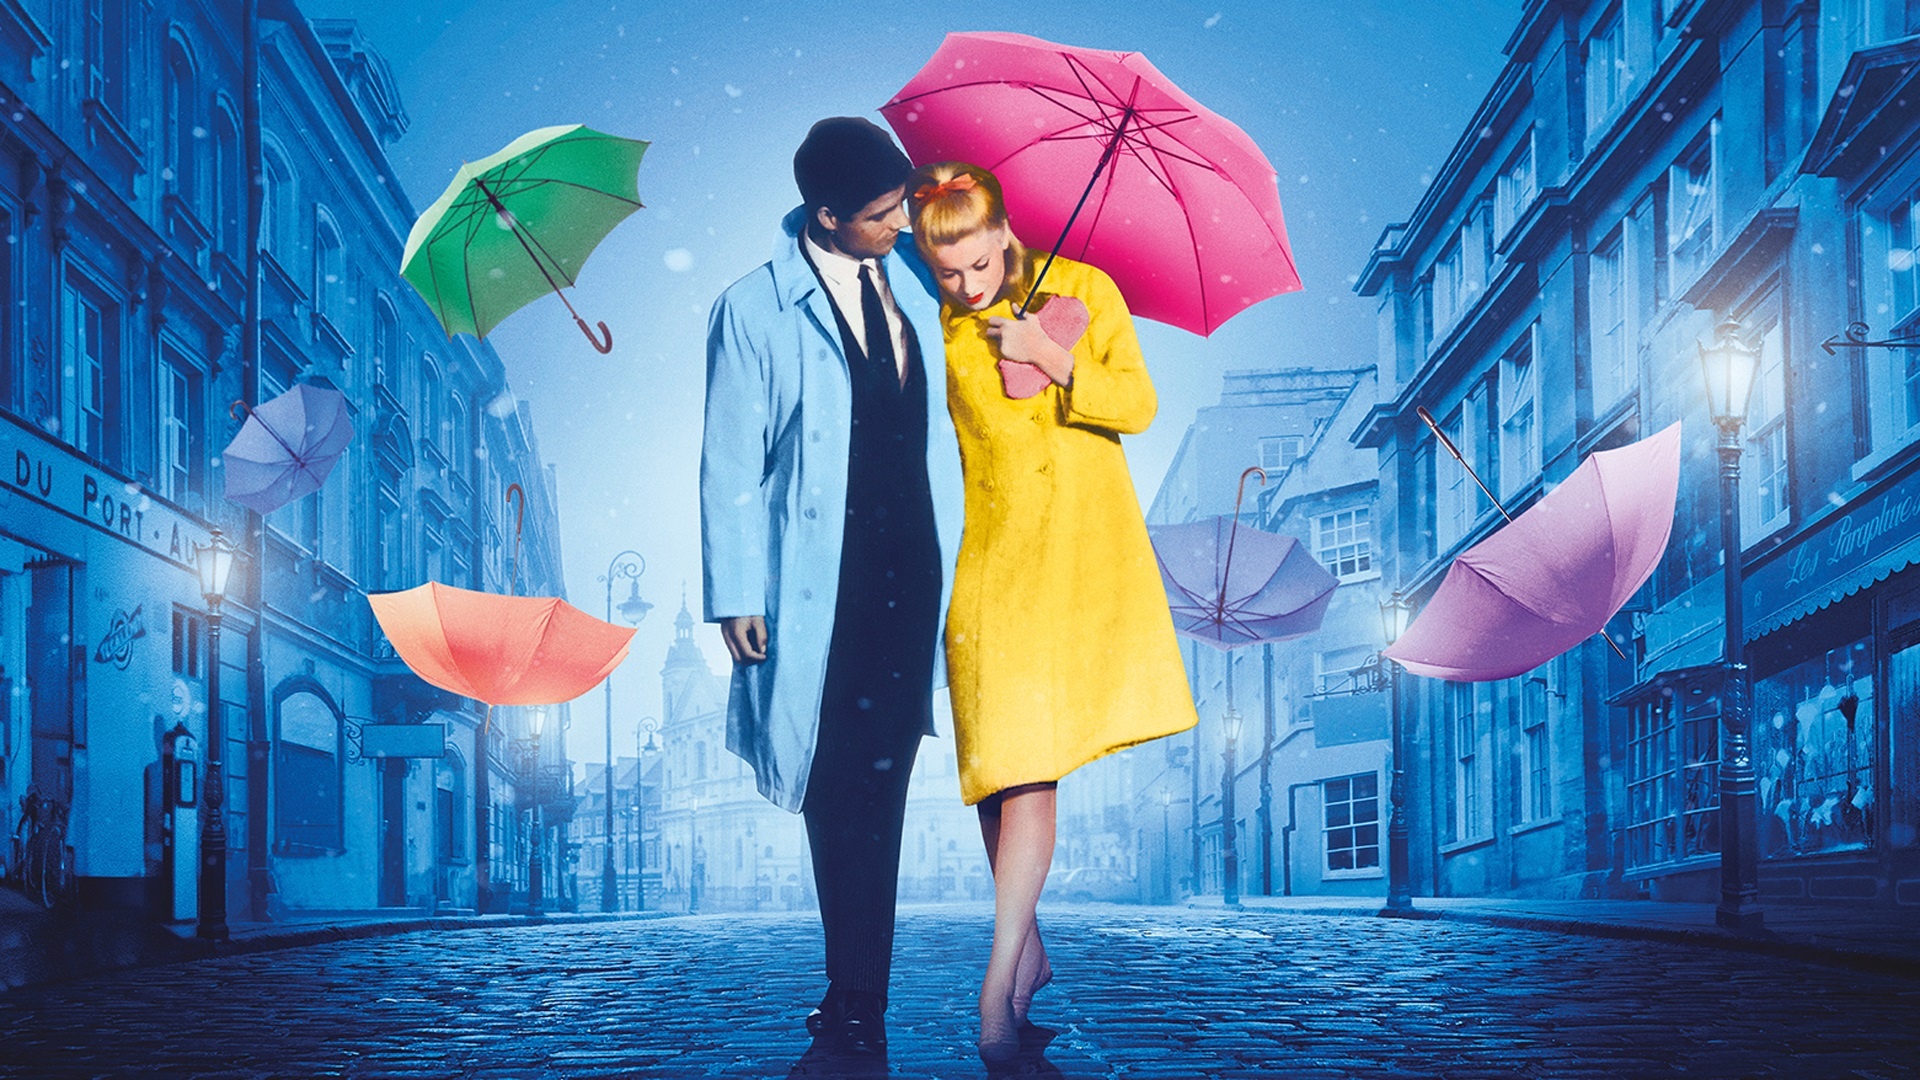 The Umbrellas of Cherbourg, Musical romance, French cinema gem, Visual splendor, 1920x1080 Full HD Desktop